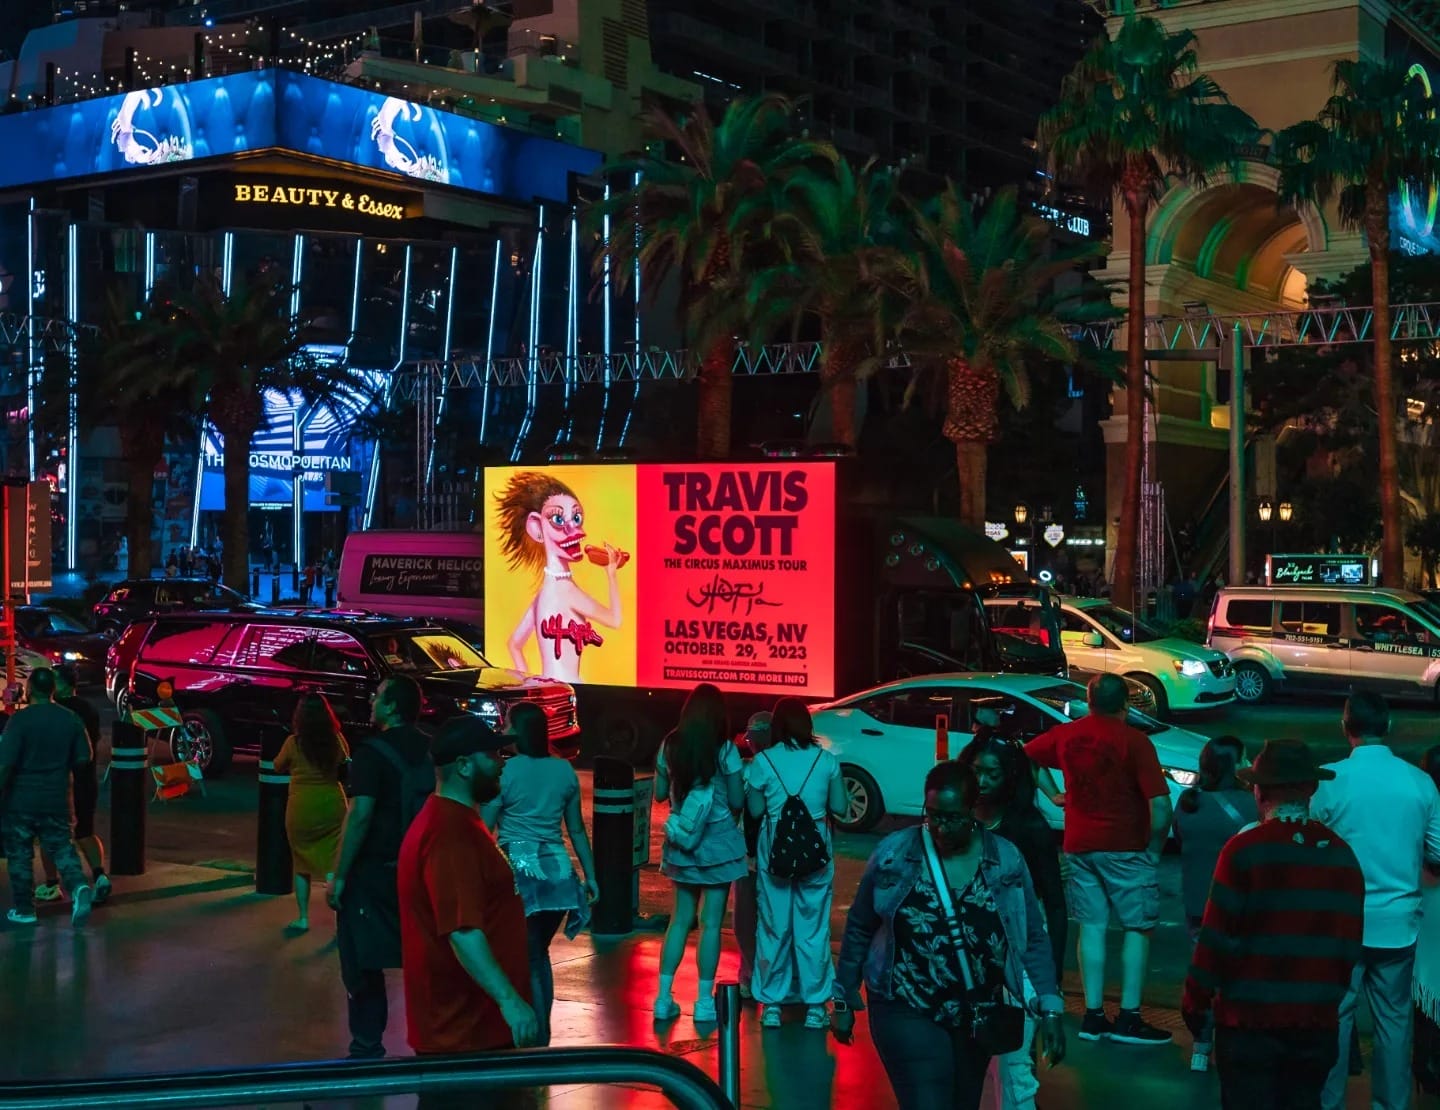 Crowded Las Vegas street at night with illuminated ads.